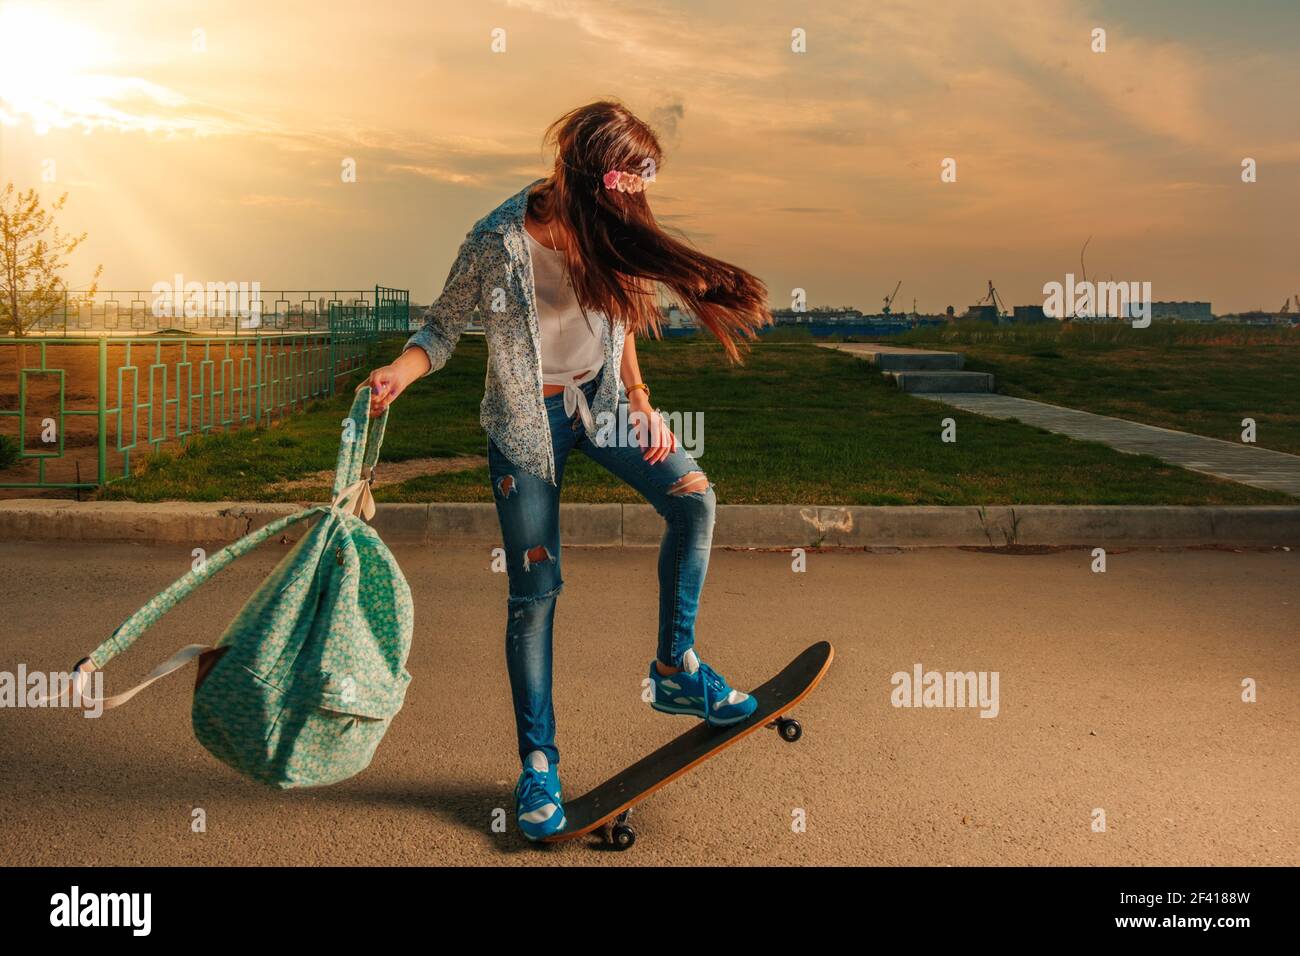 Millennial Female Stylish Hipster Girl Smiling Posing Taking Selfie Full  Stock Photo by ©panicAttack 209416018